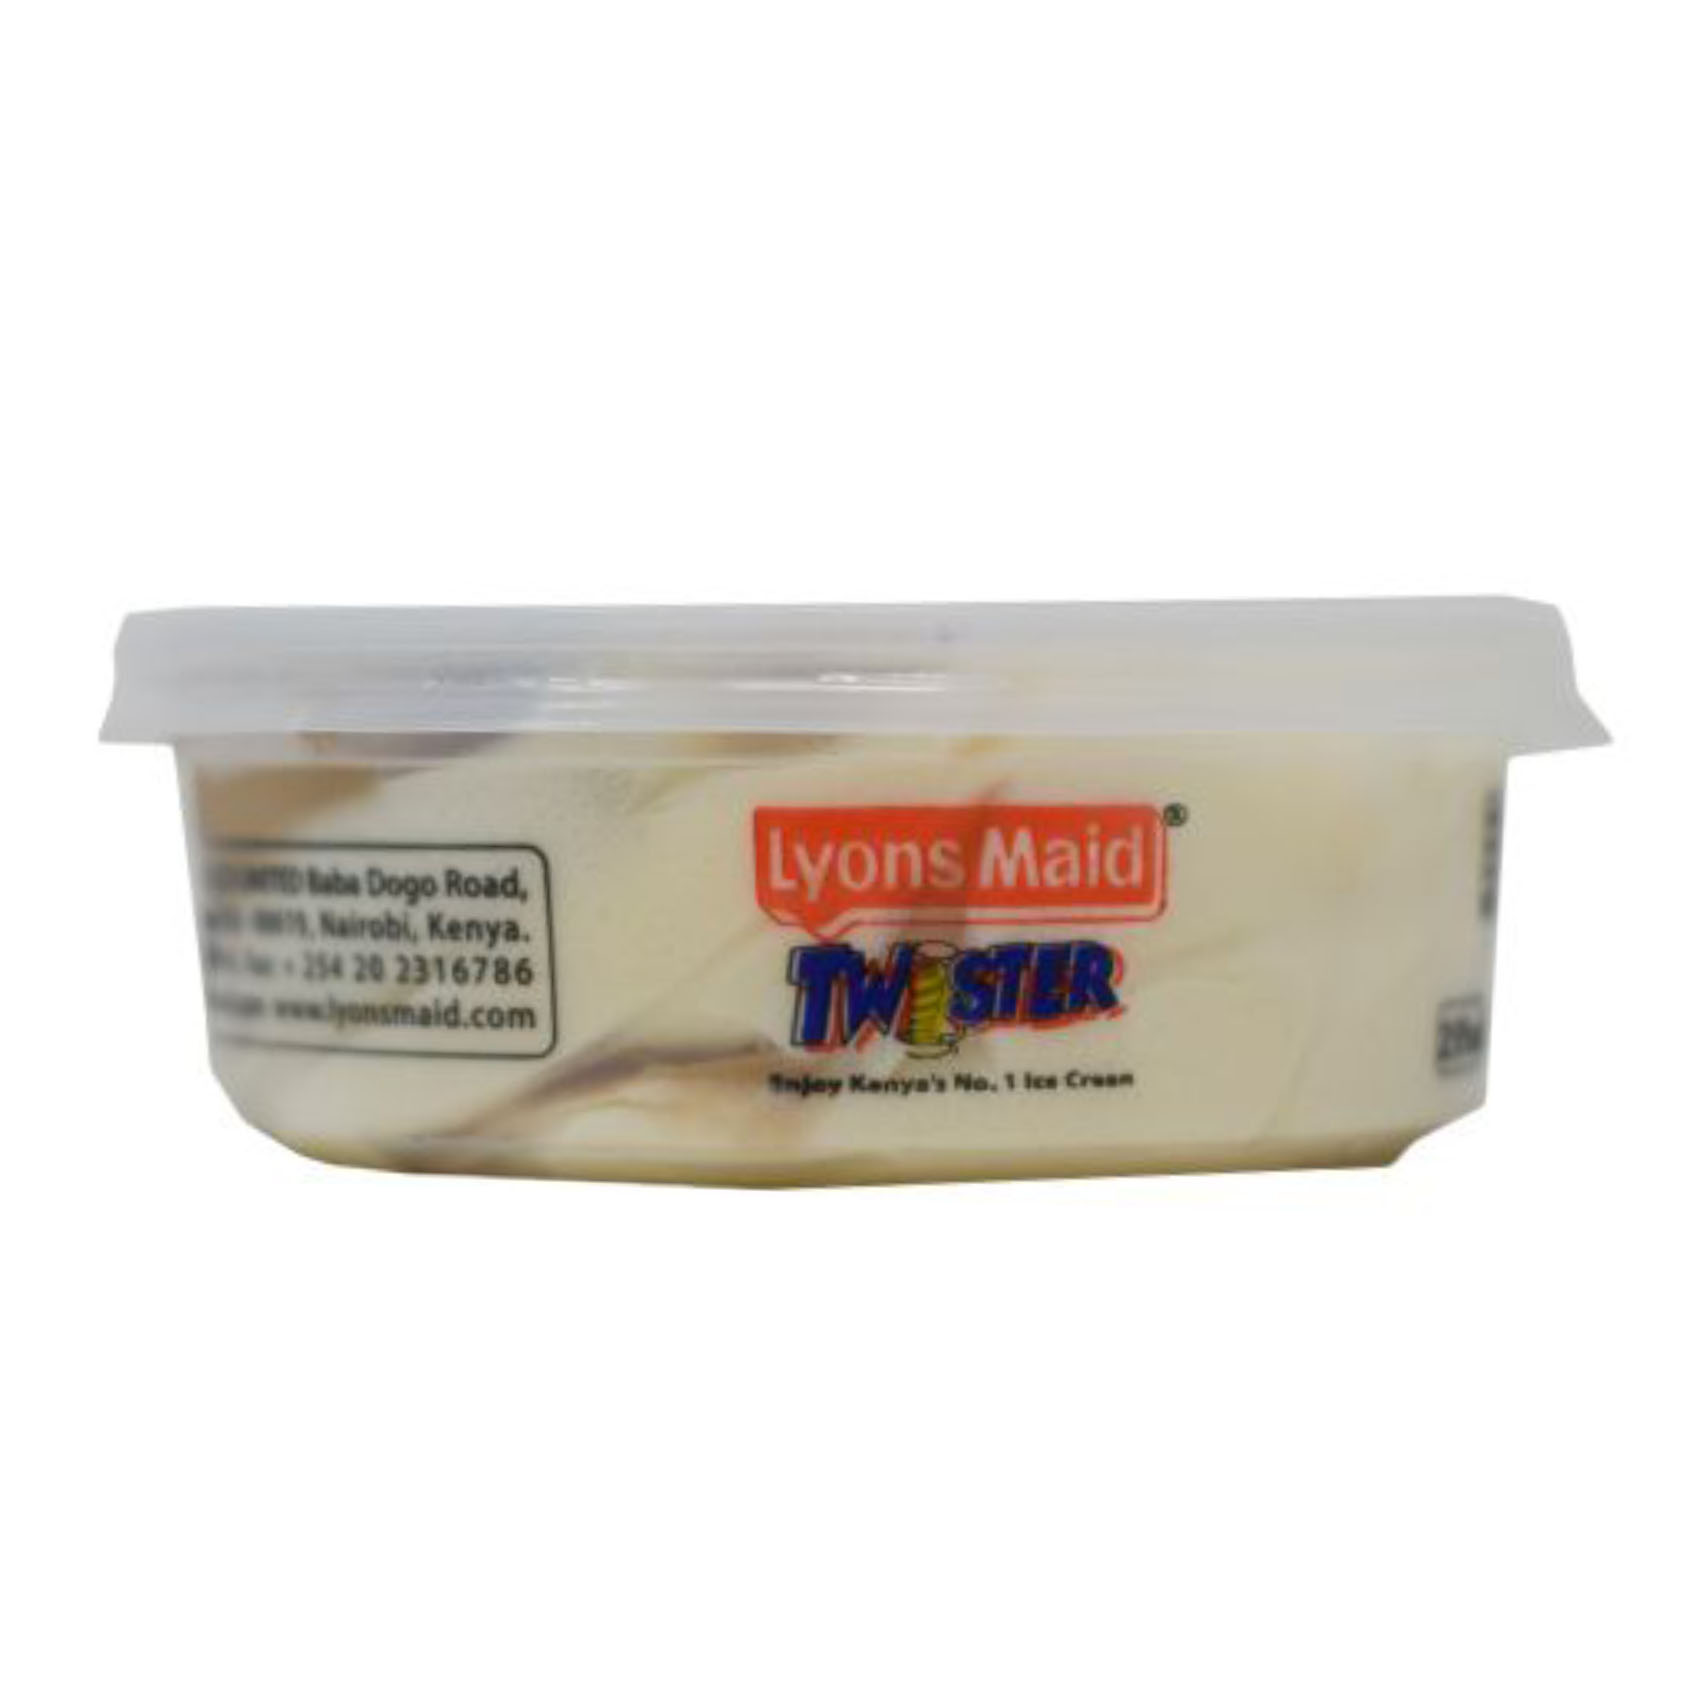 Lyons Maid Twister Vanilla And Chocolate Ice Cream 250ml